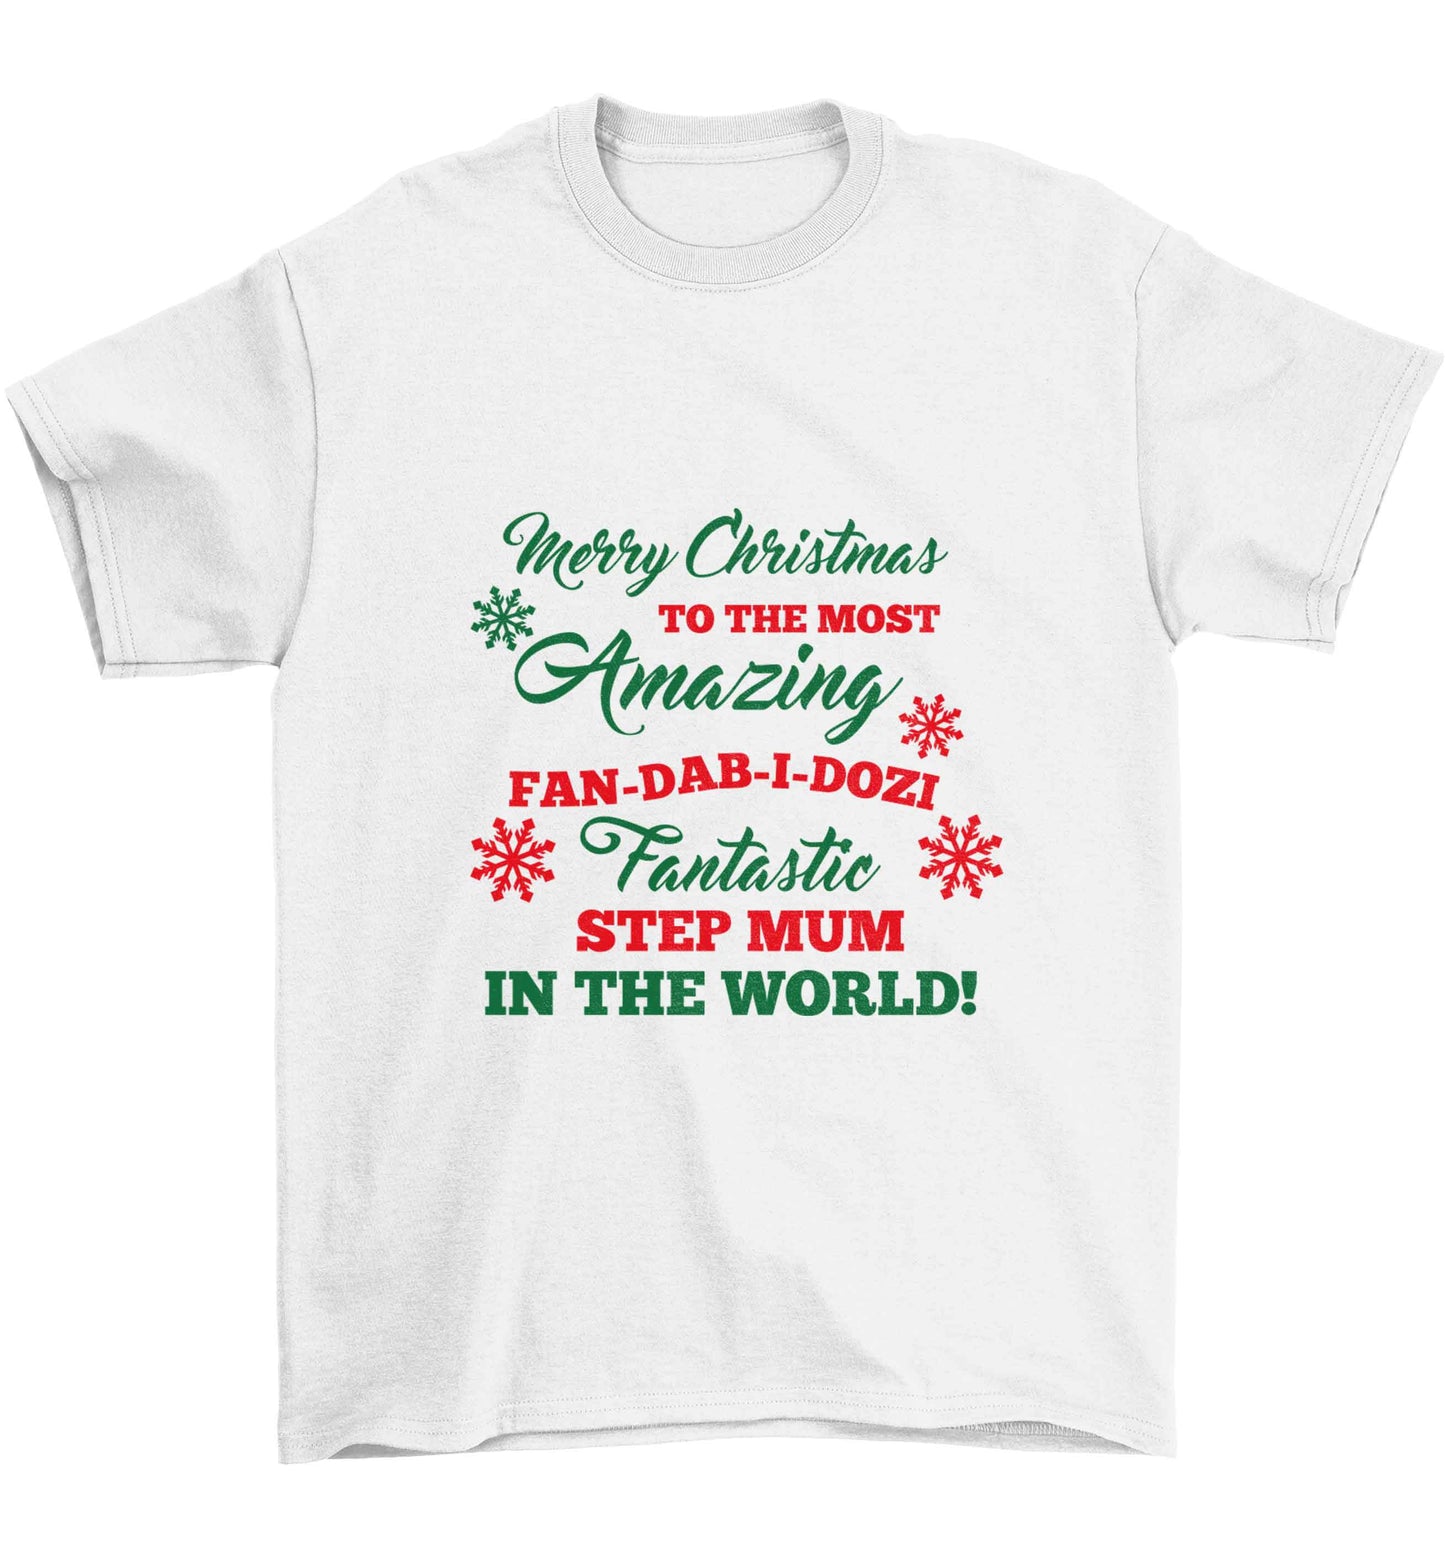 Merry Christmas to the most amazing fan-dab-i-dozi fantasic Step Mum in the world Children's white Tshirt 12-13 Years